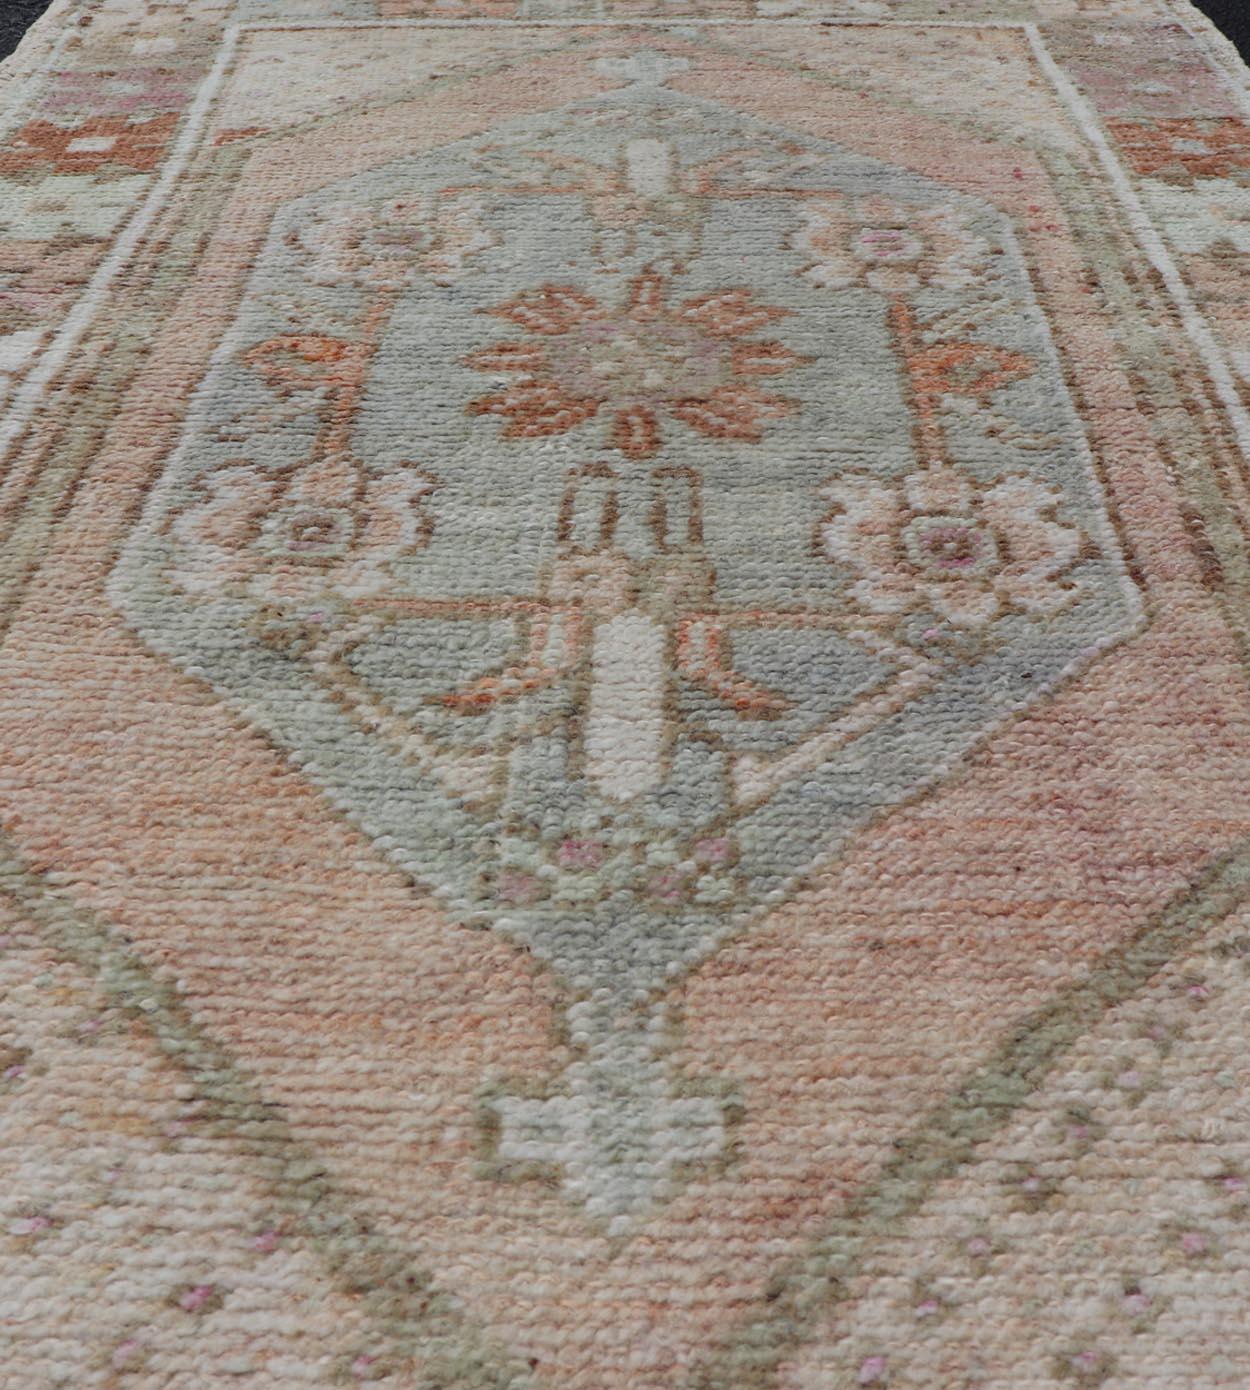 Vintage Turkish Oushak Carpet with Beautiful Floral Motifs in Tan, Camel, Orange For Sale 3